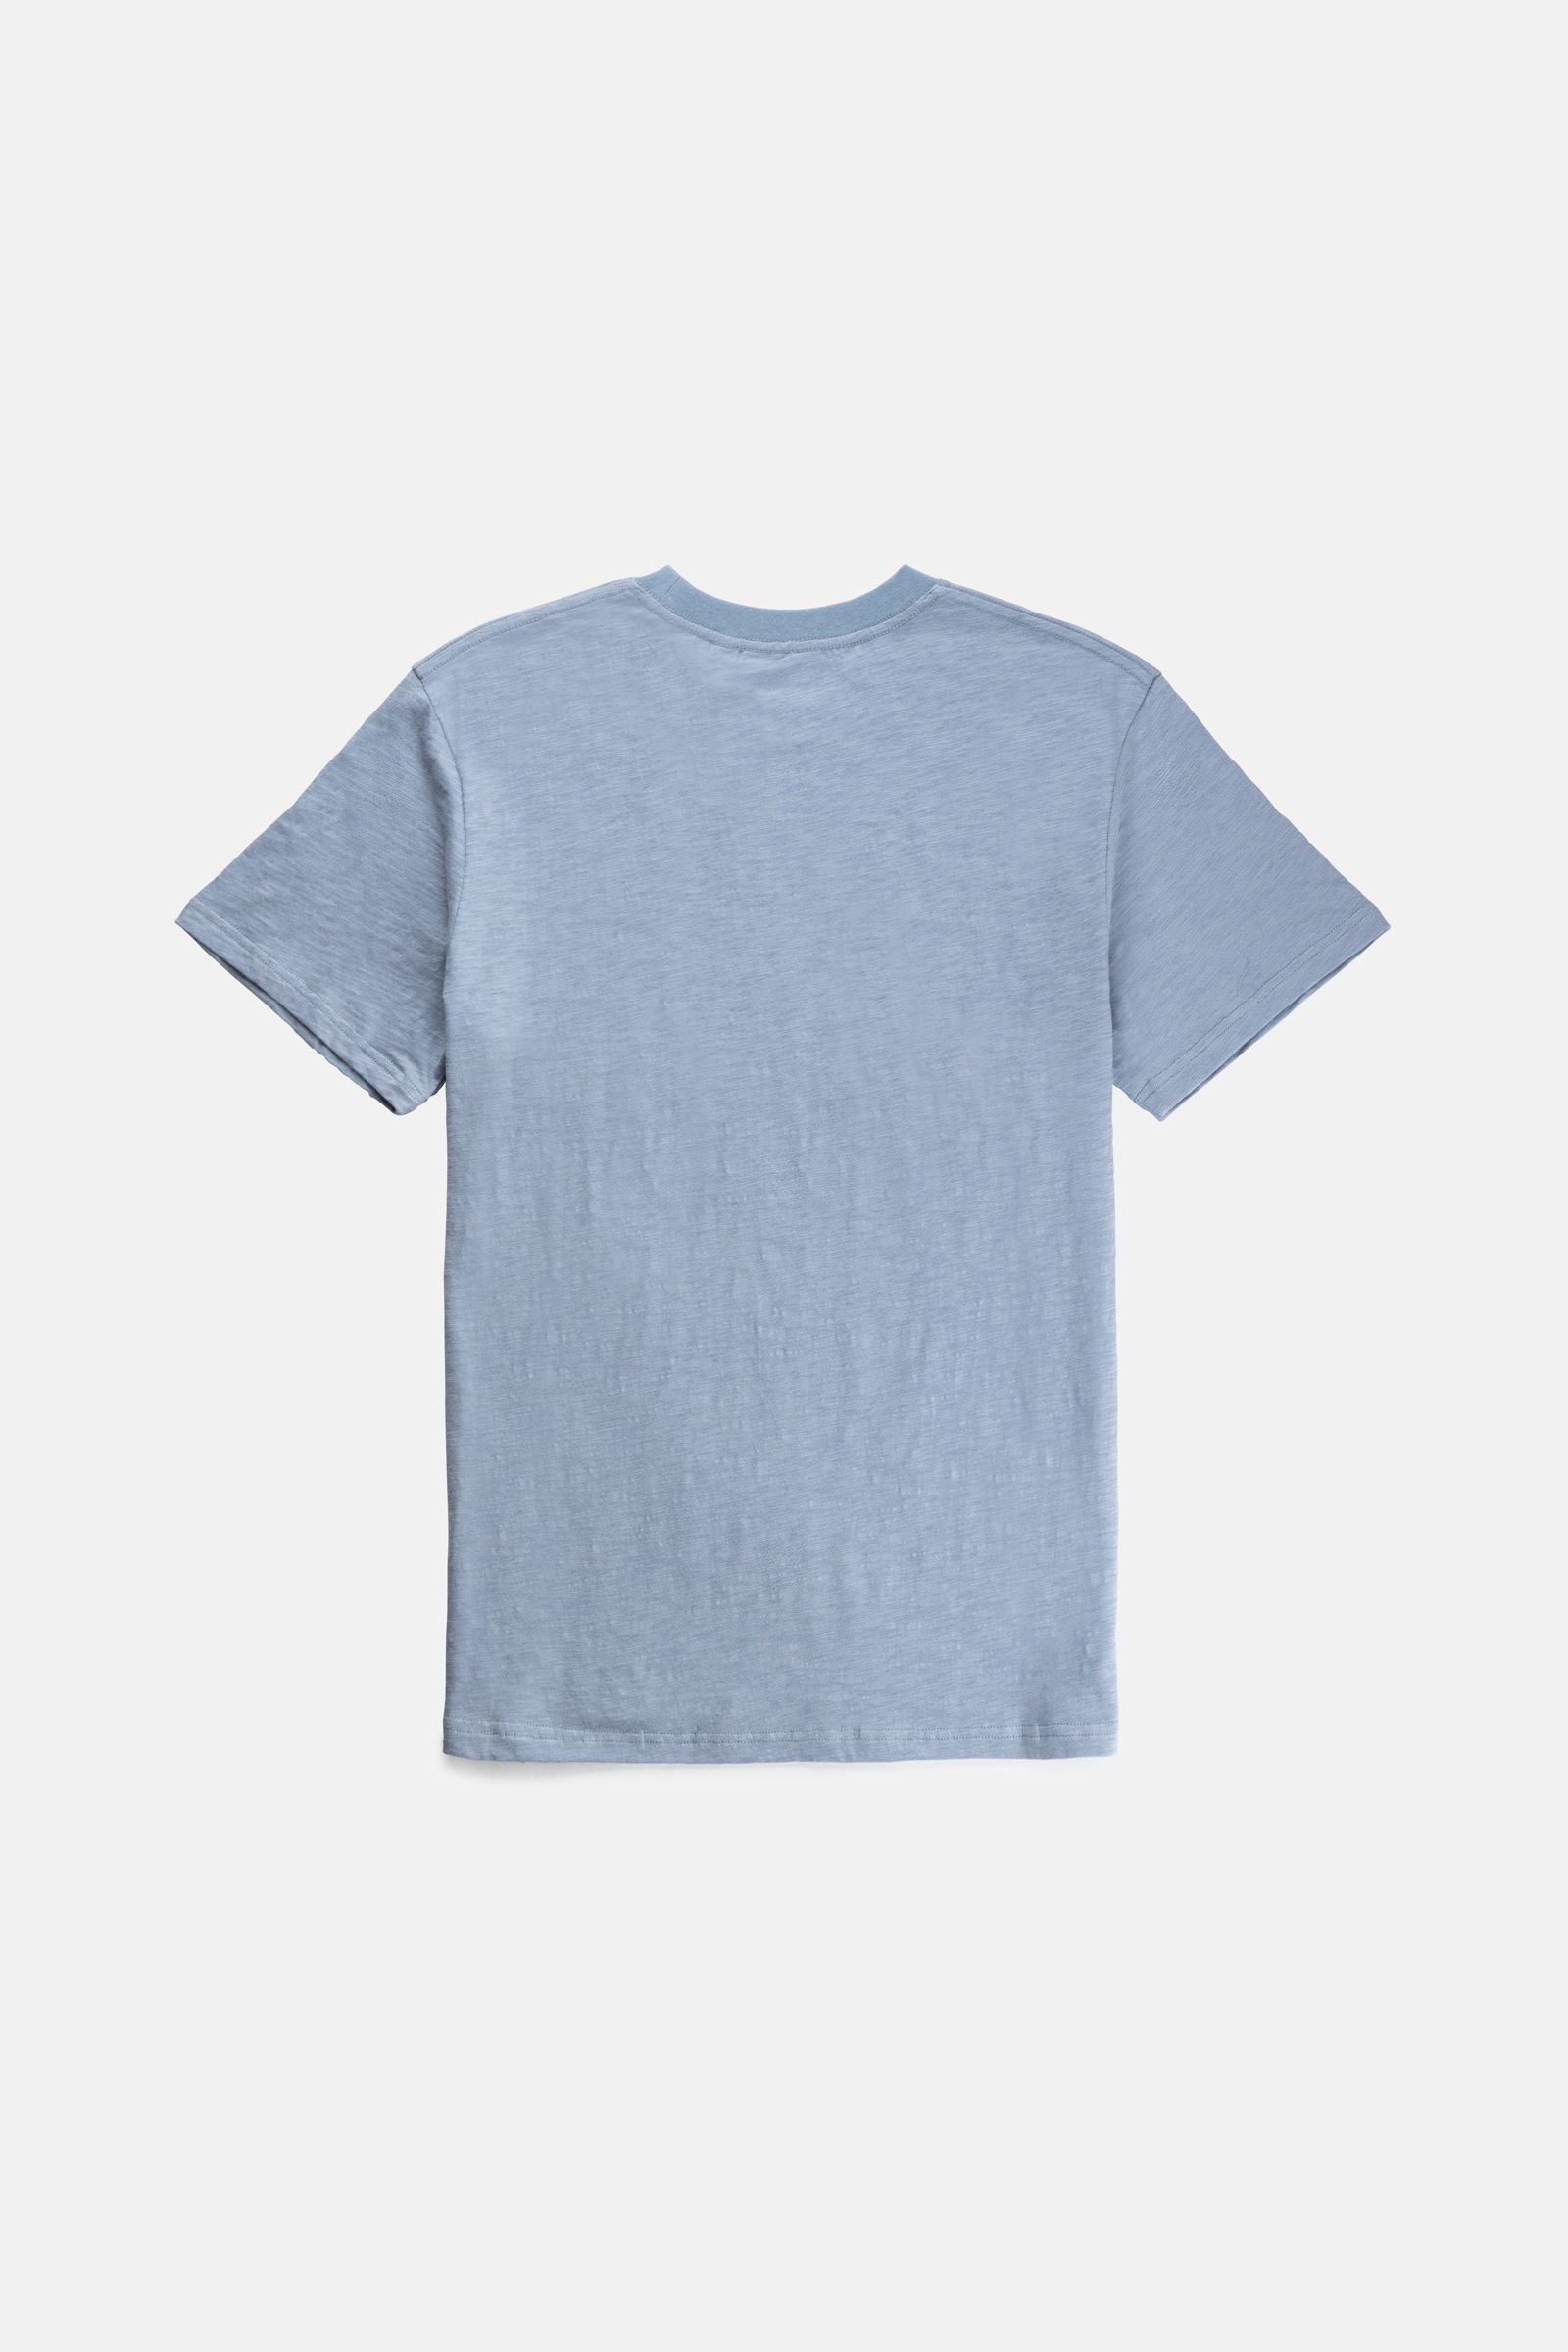 Slub T-Shirt- Mist